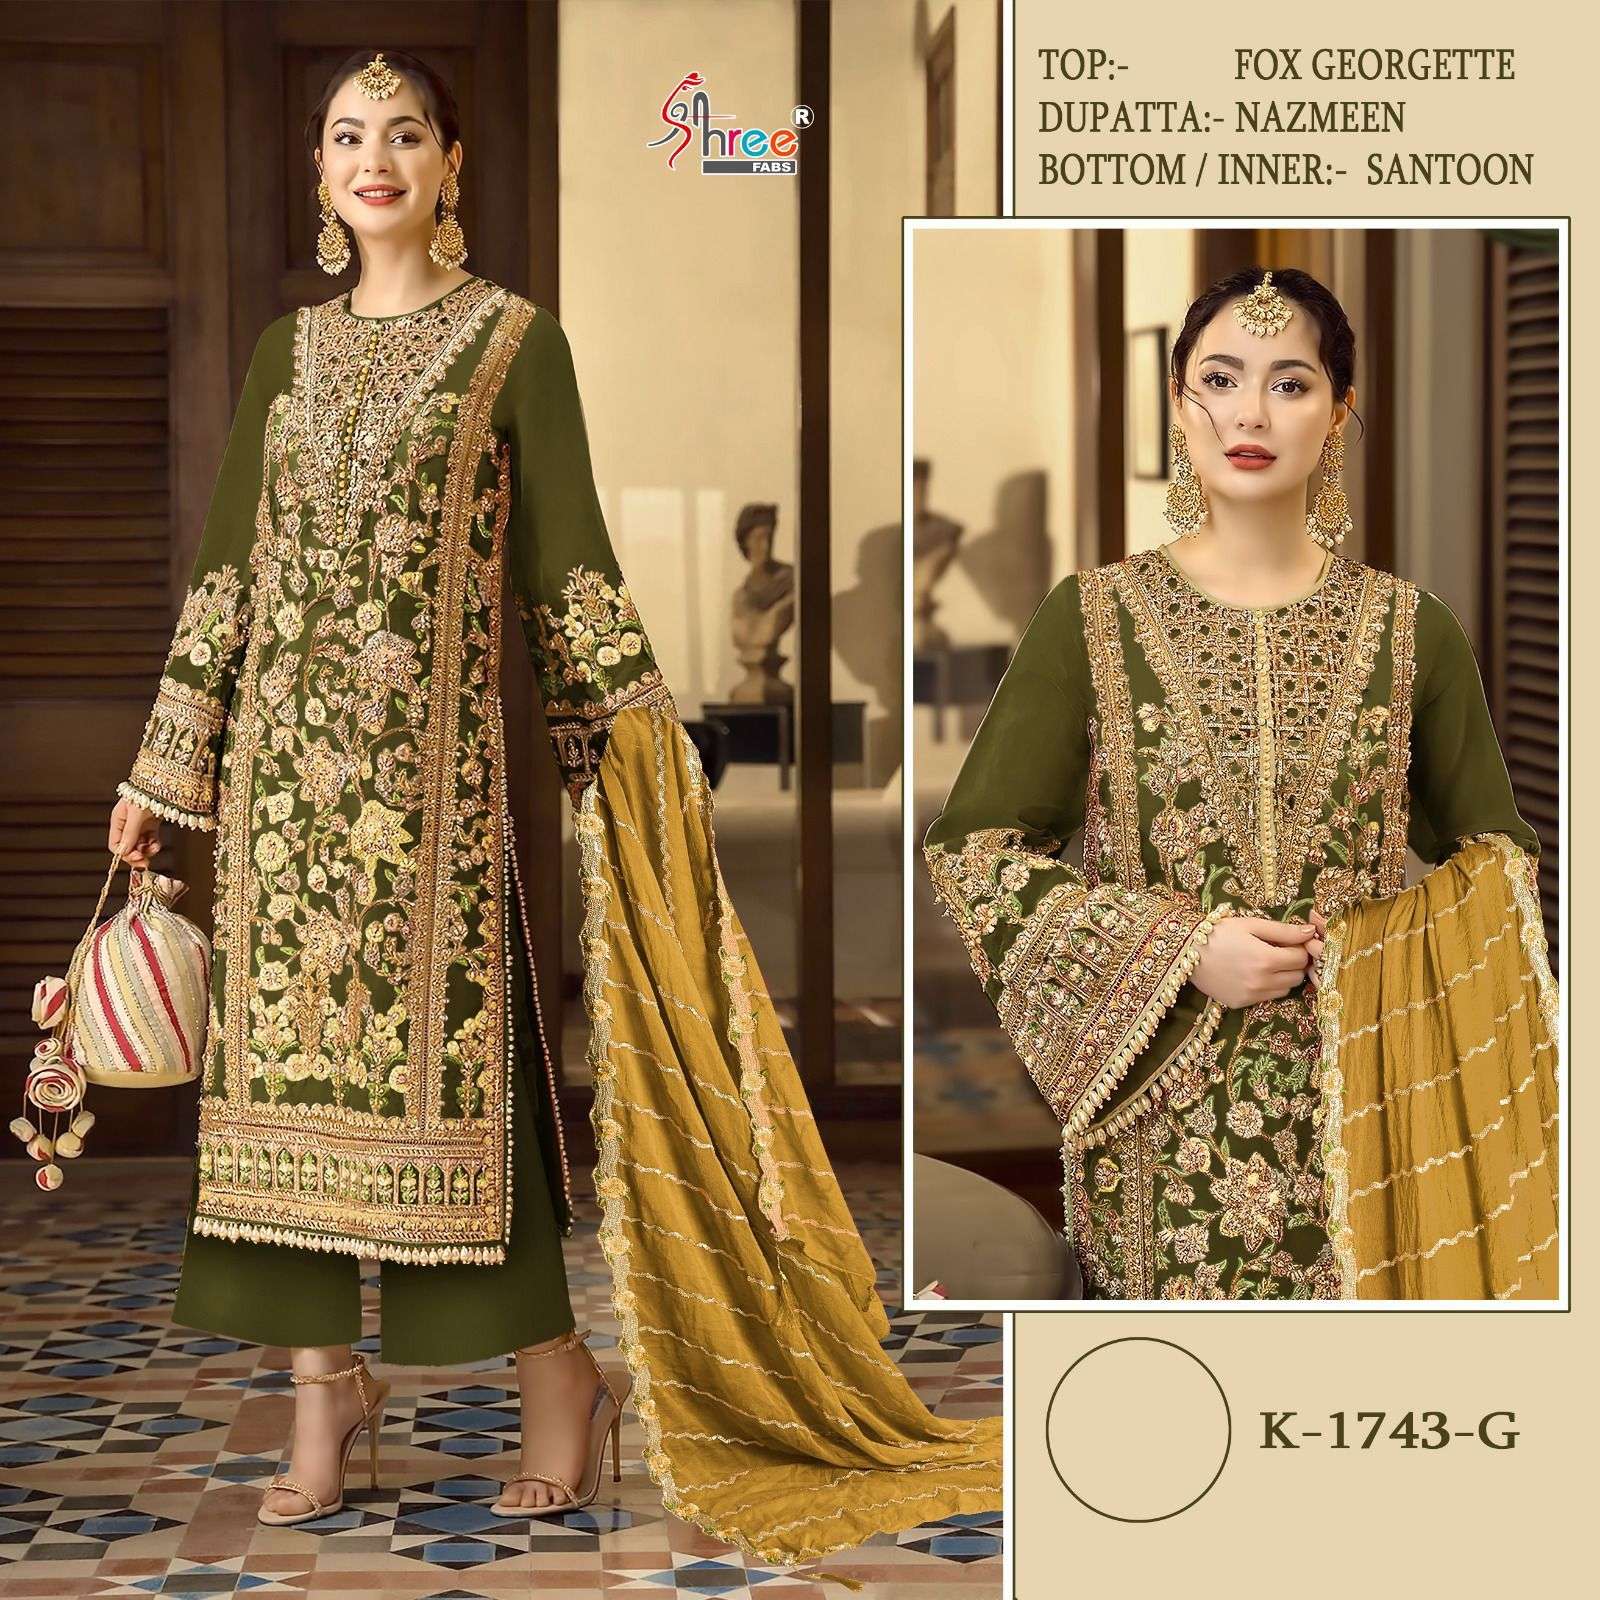 shree fabs k-1743 colour series designer wedding wear pakistani suit wholesaler surat gujarat